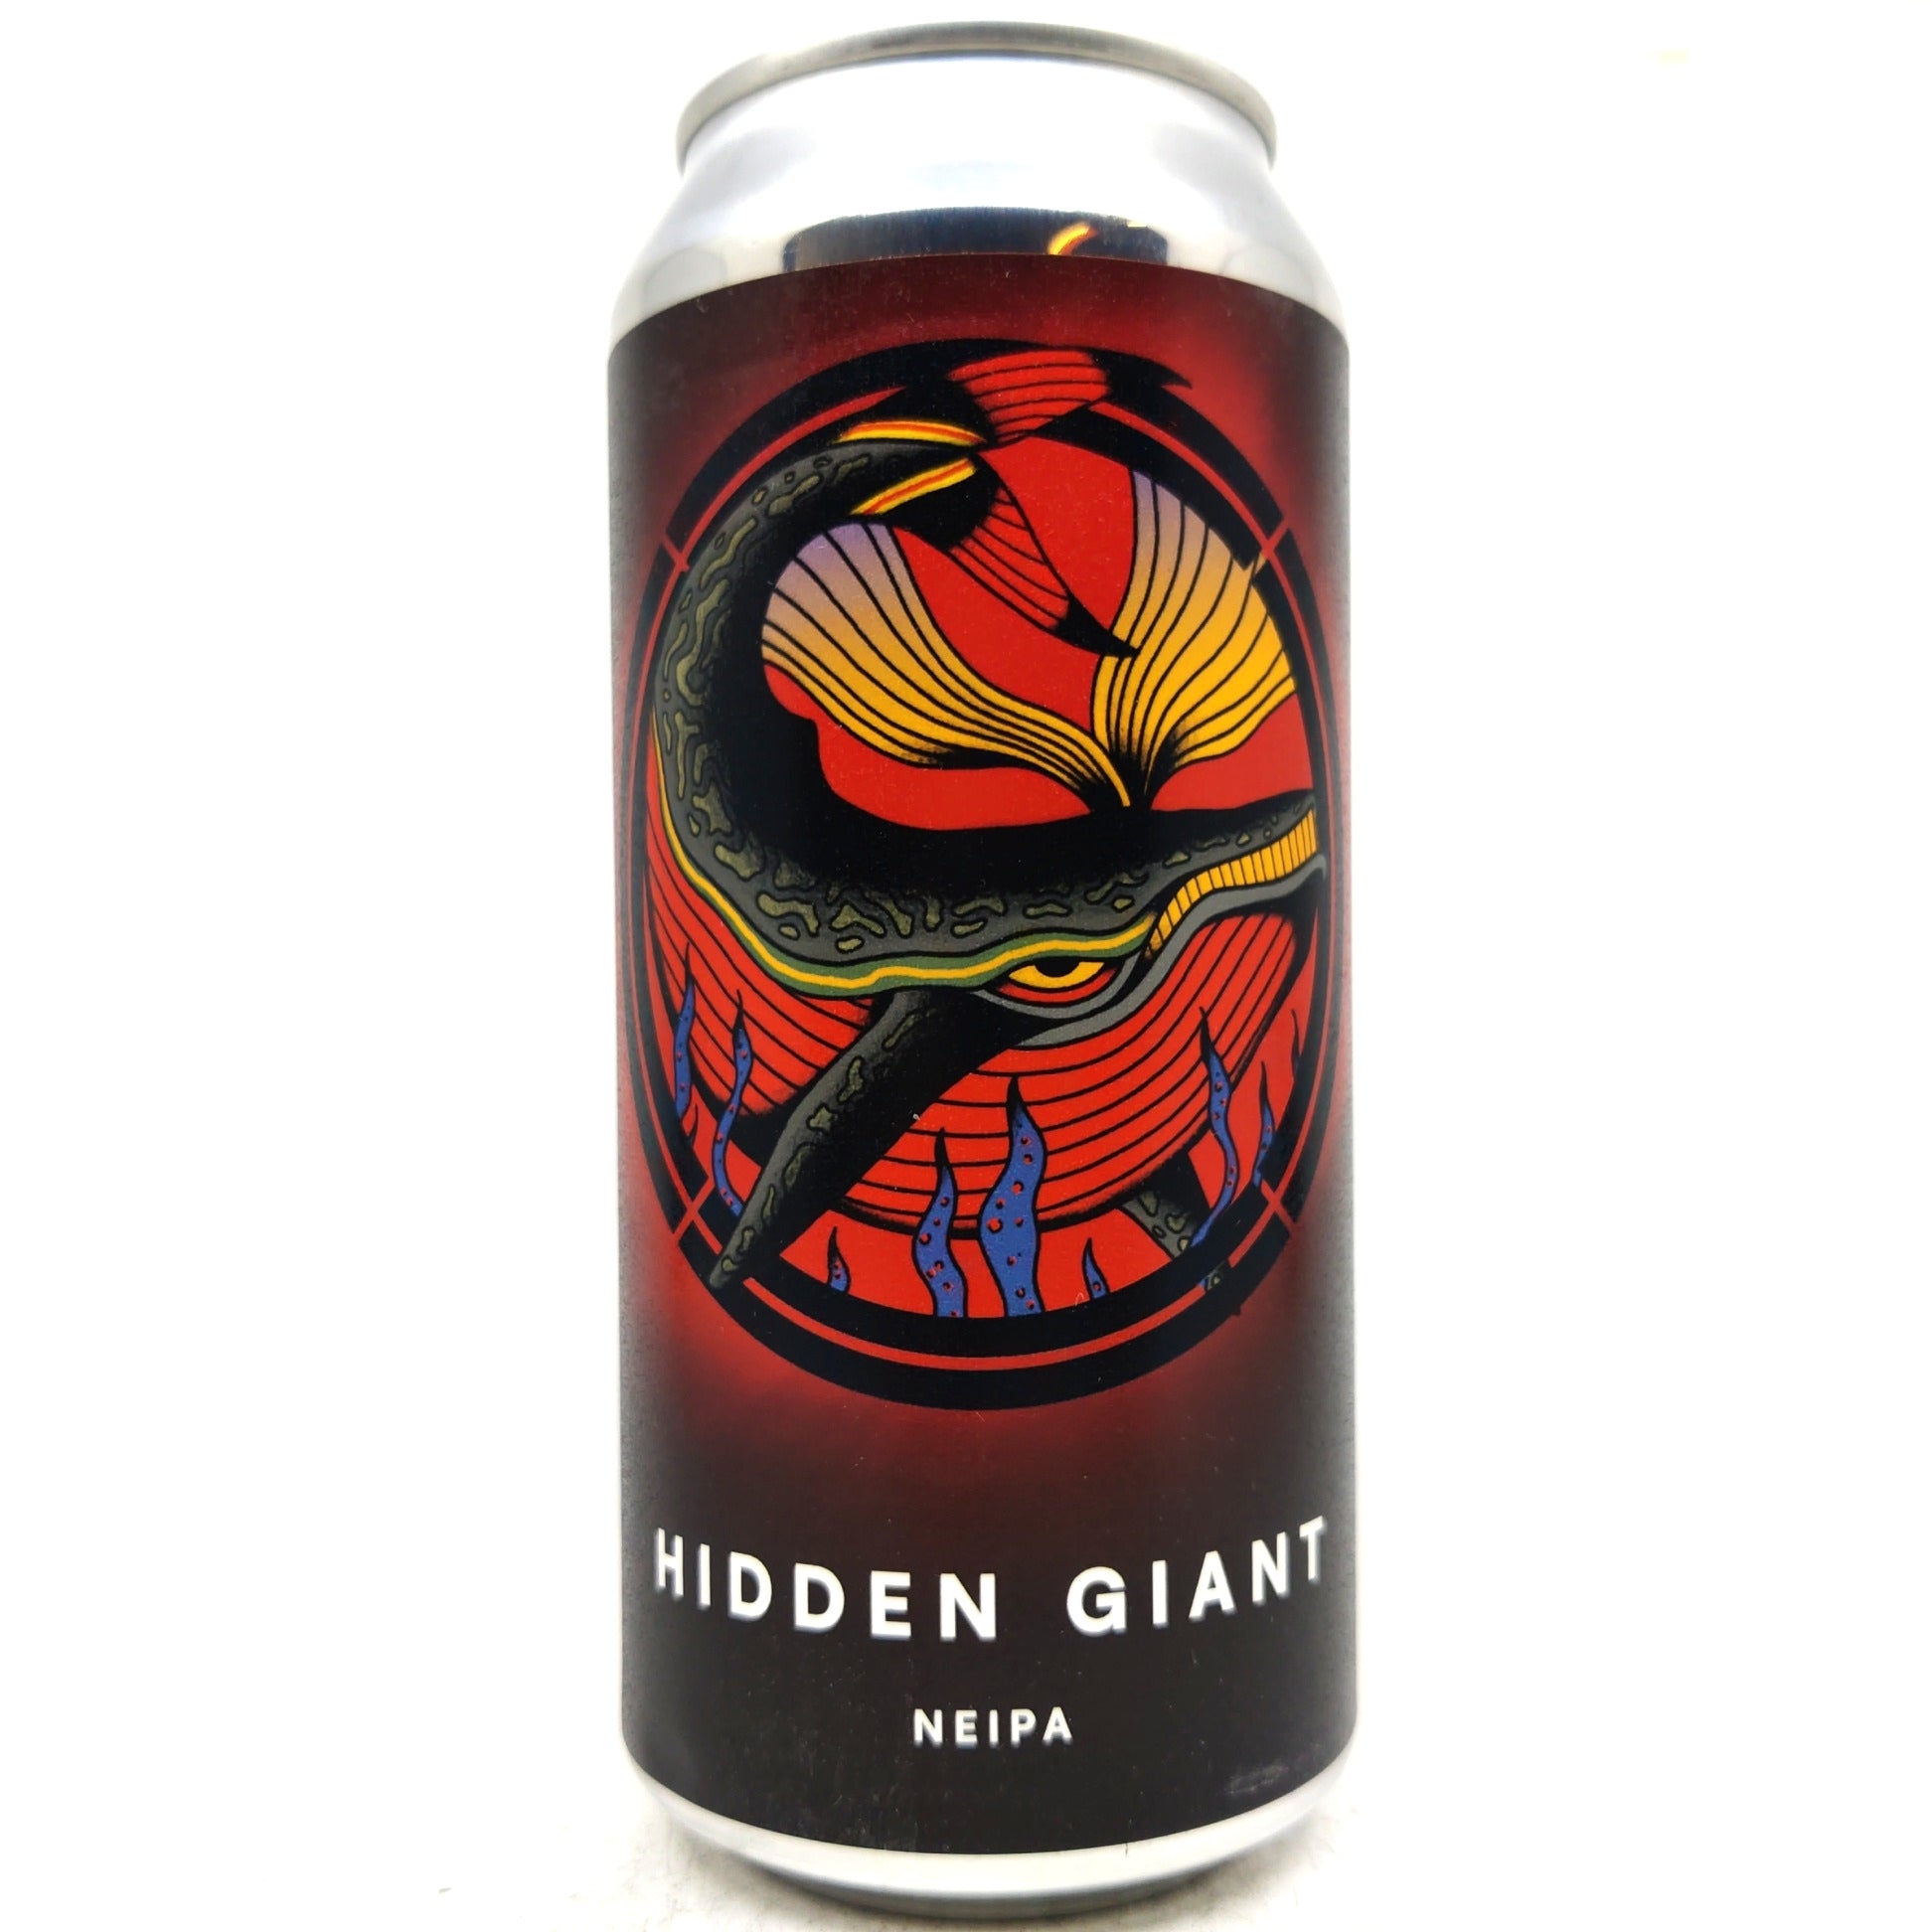 Otherworld Hidden Giant New England IPA 5.9% (440ml can)-Hop Burns & Black